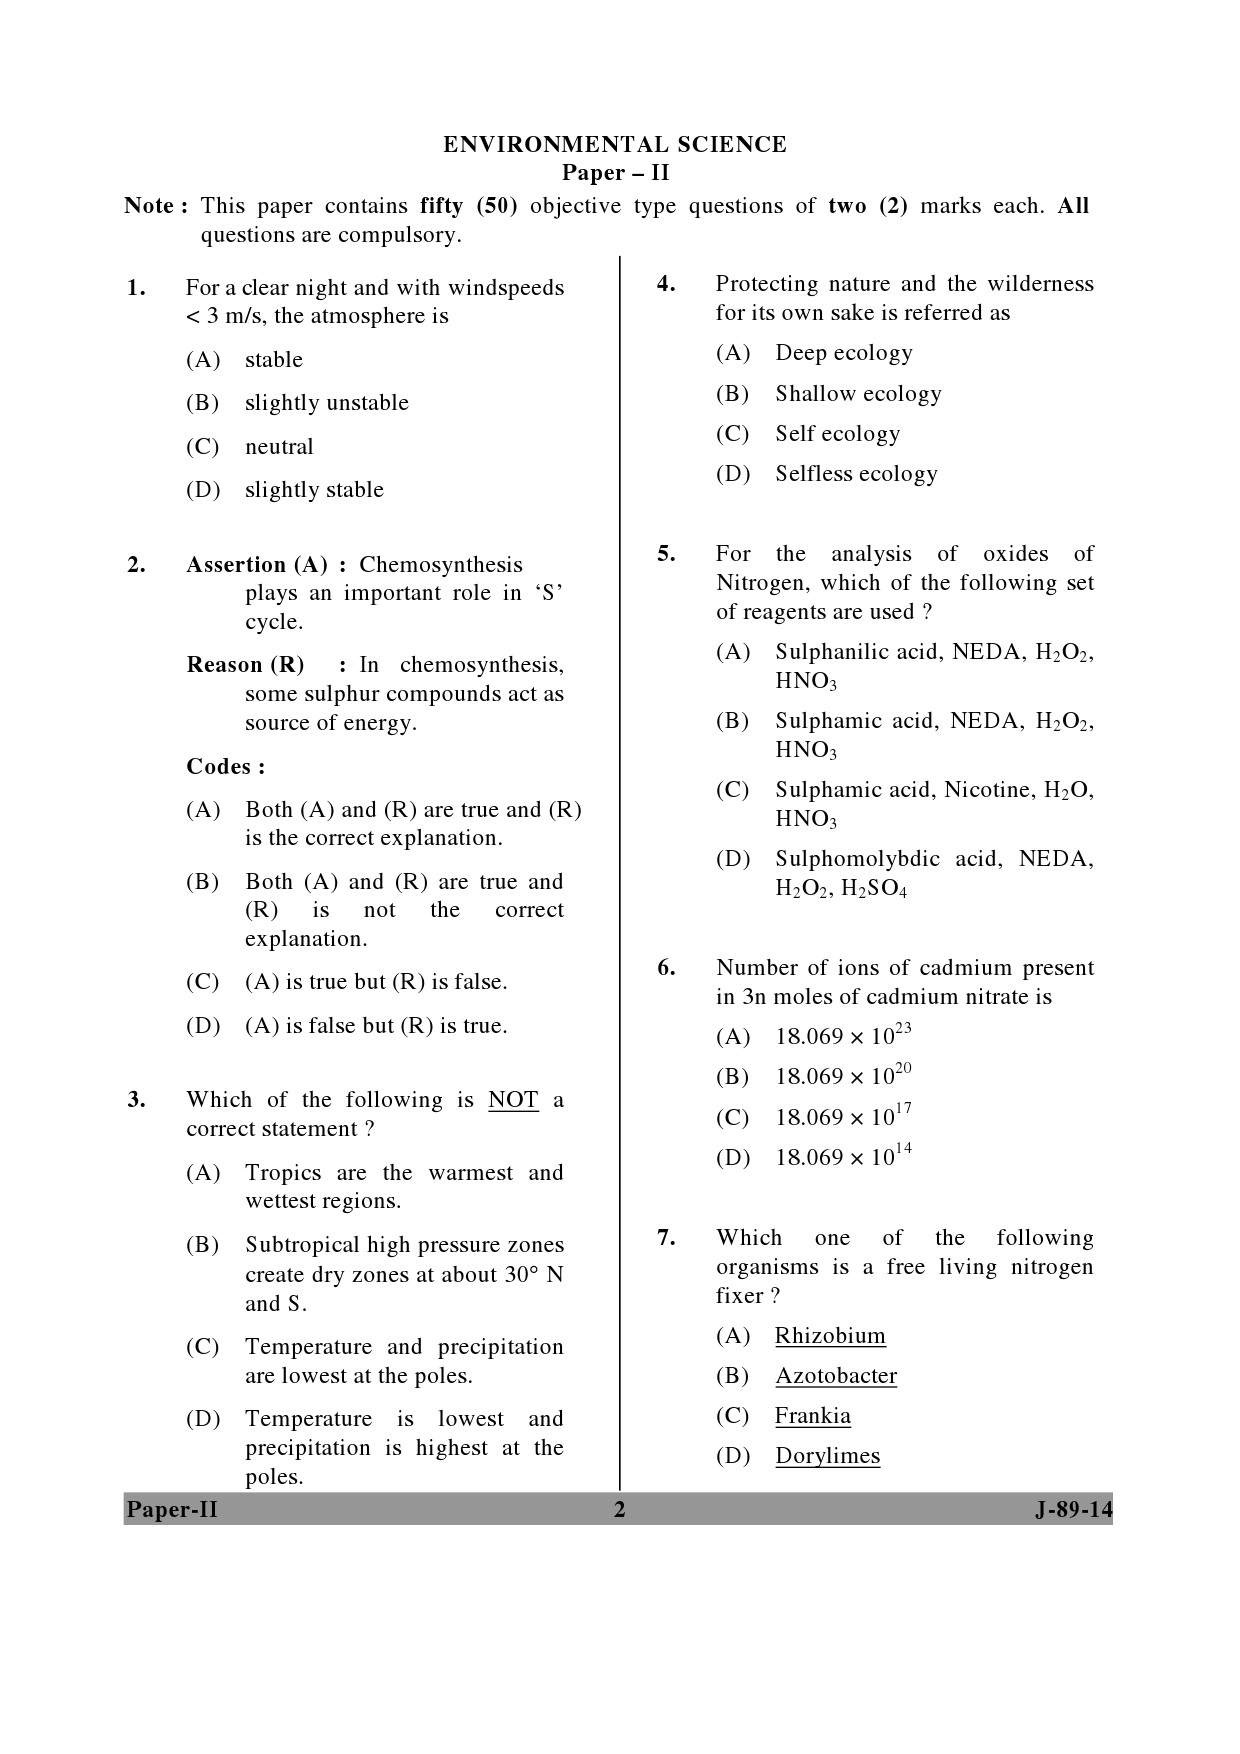 UGC NET Environmental Science Question Paper II June 2014 2